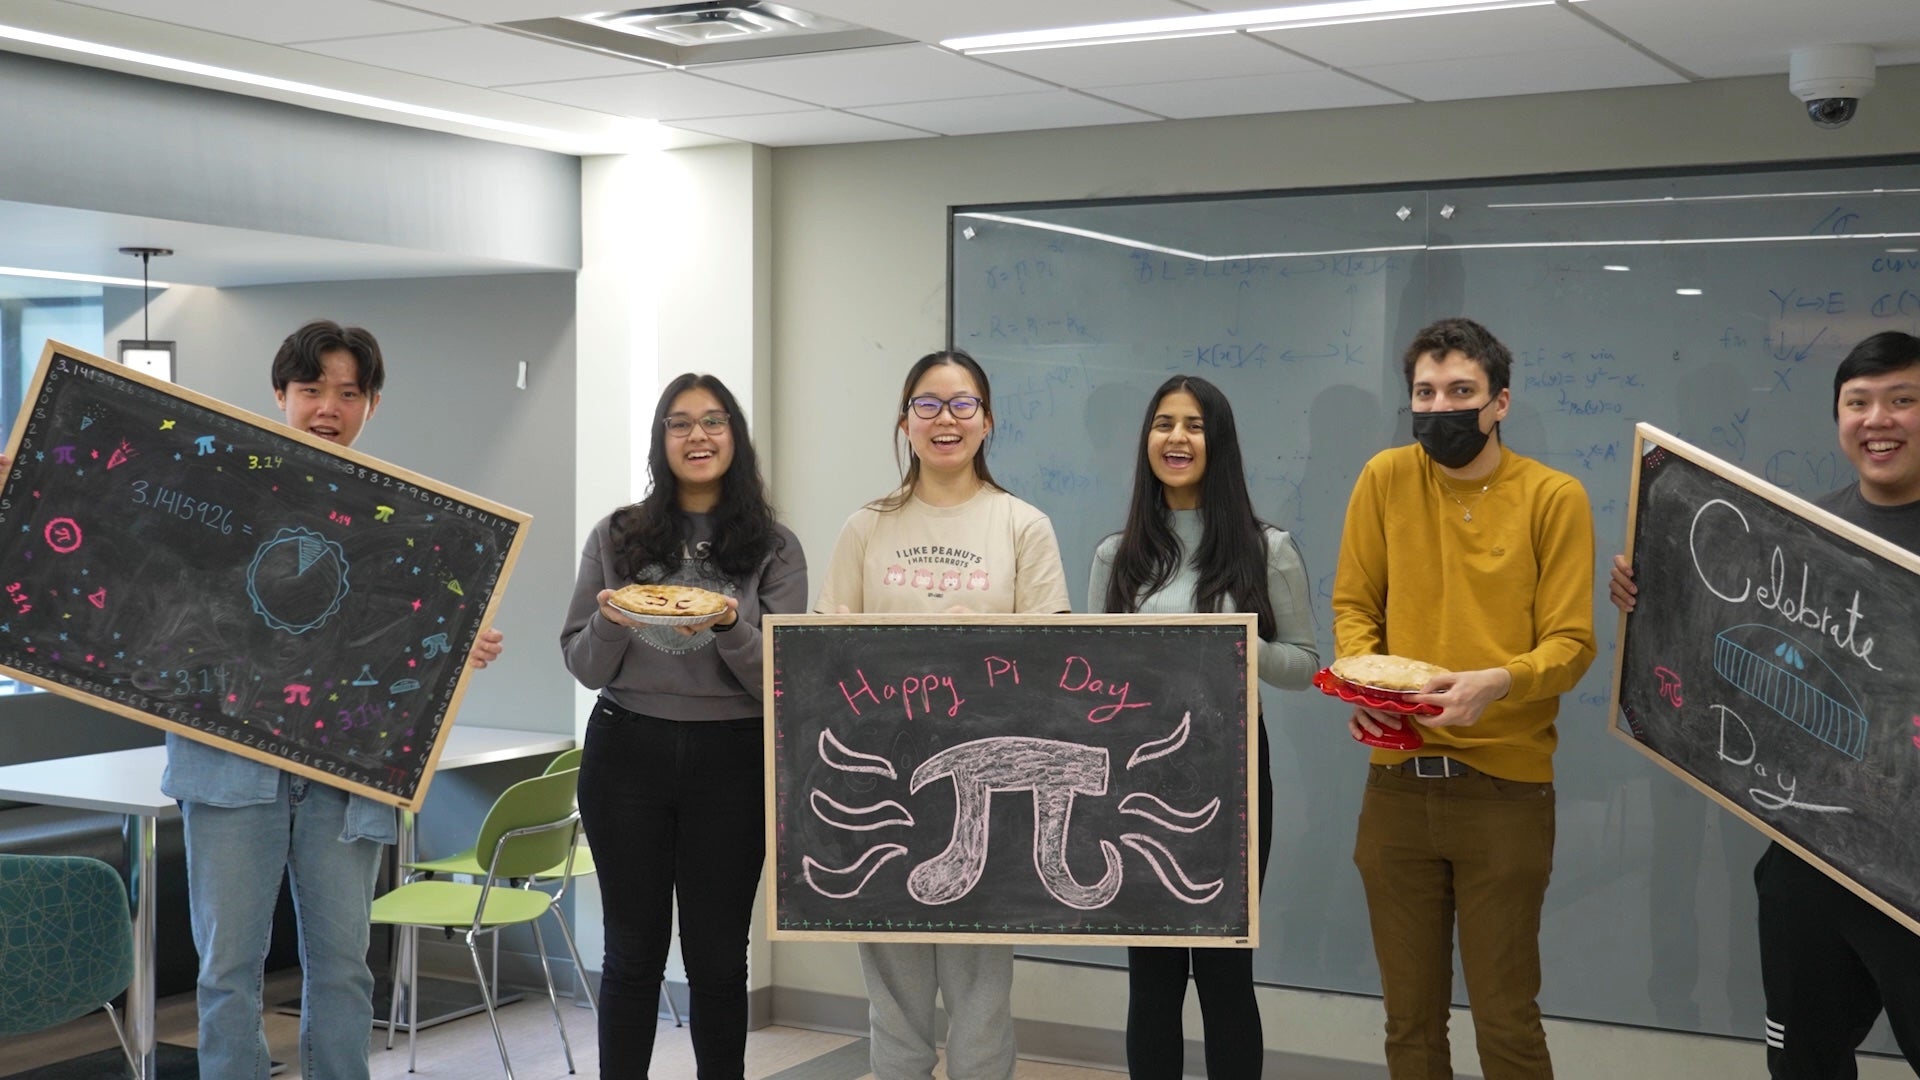 Waterloo students celebrate pi day